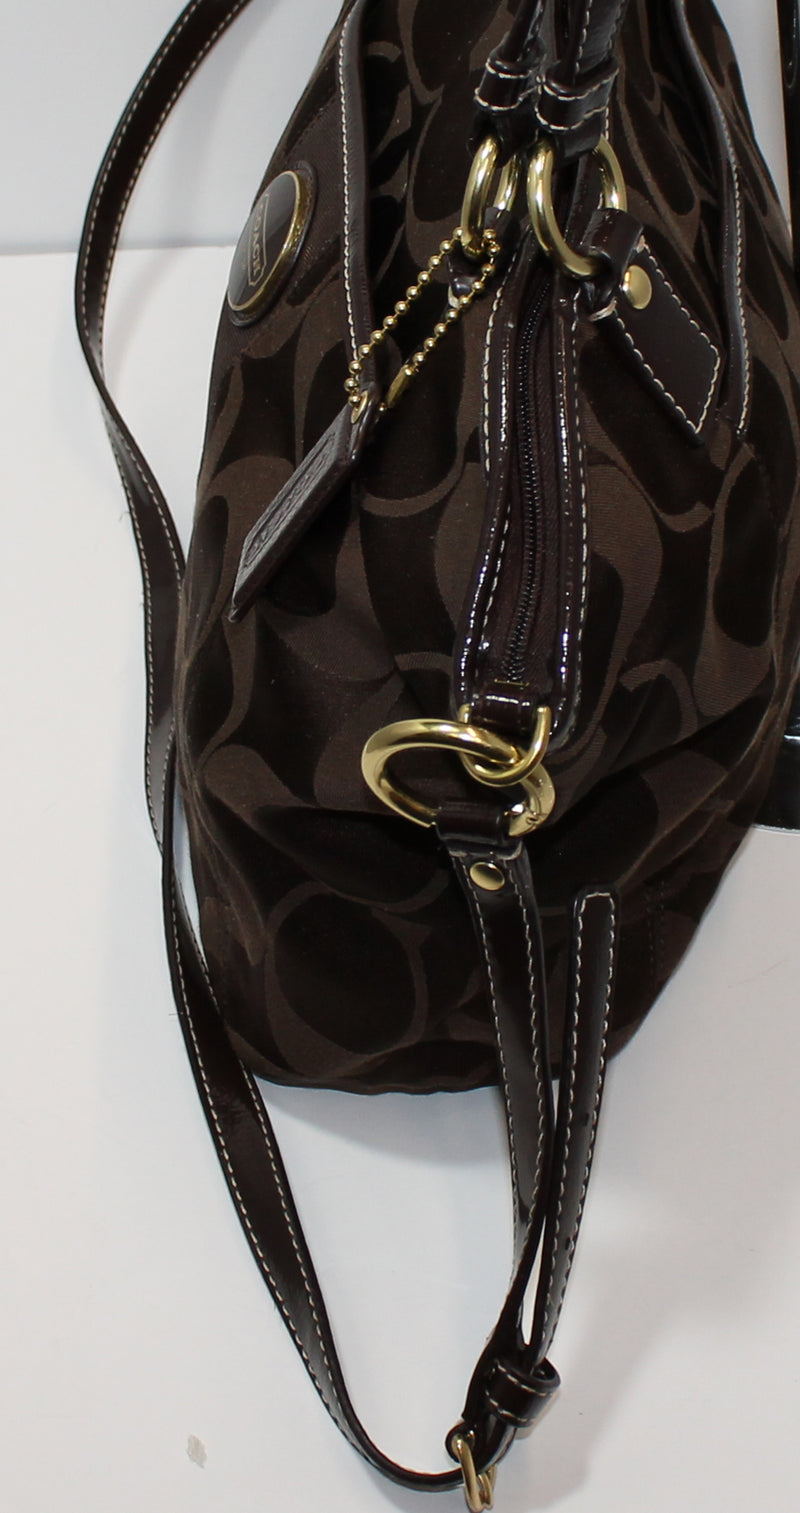 Coach Black & Gray Canvas Monogram Purse Bag Handbag Authentic Logo Shoulder